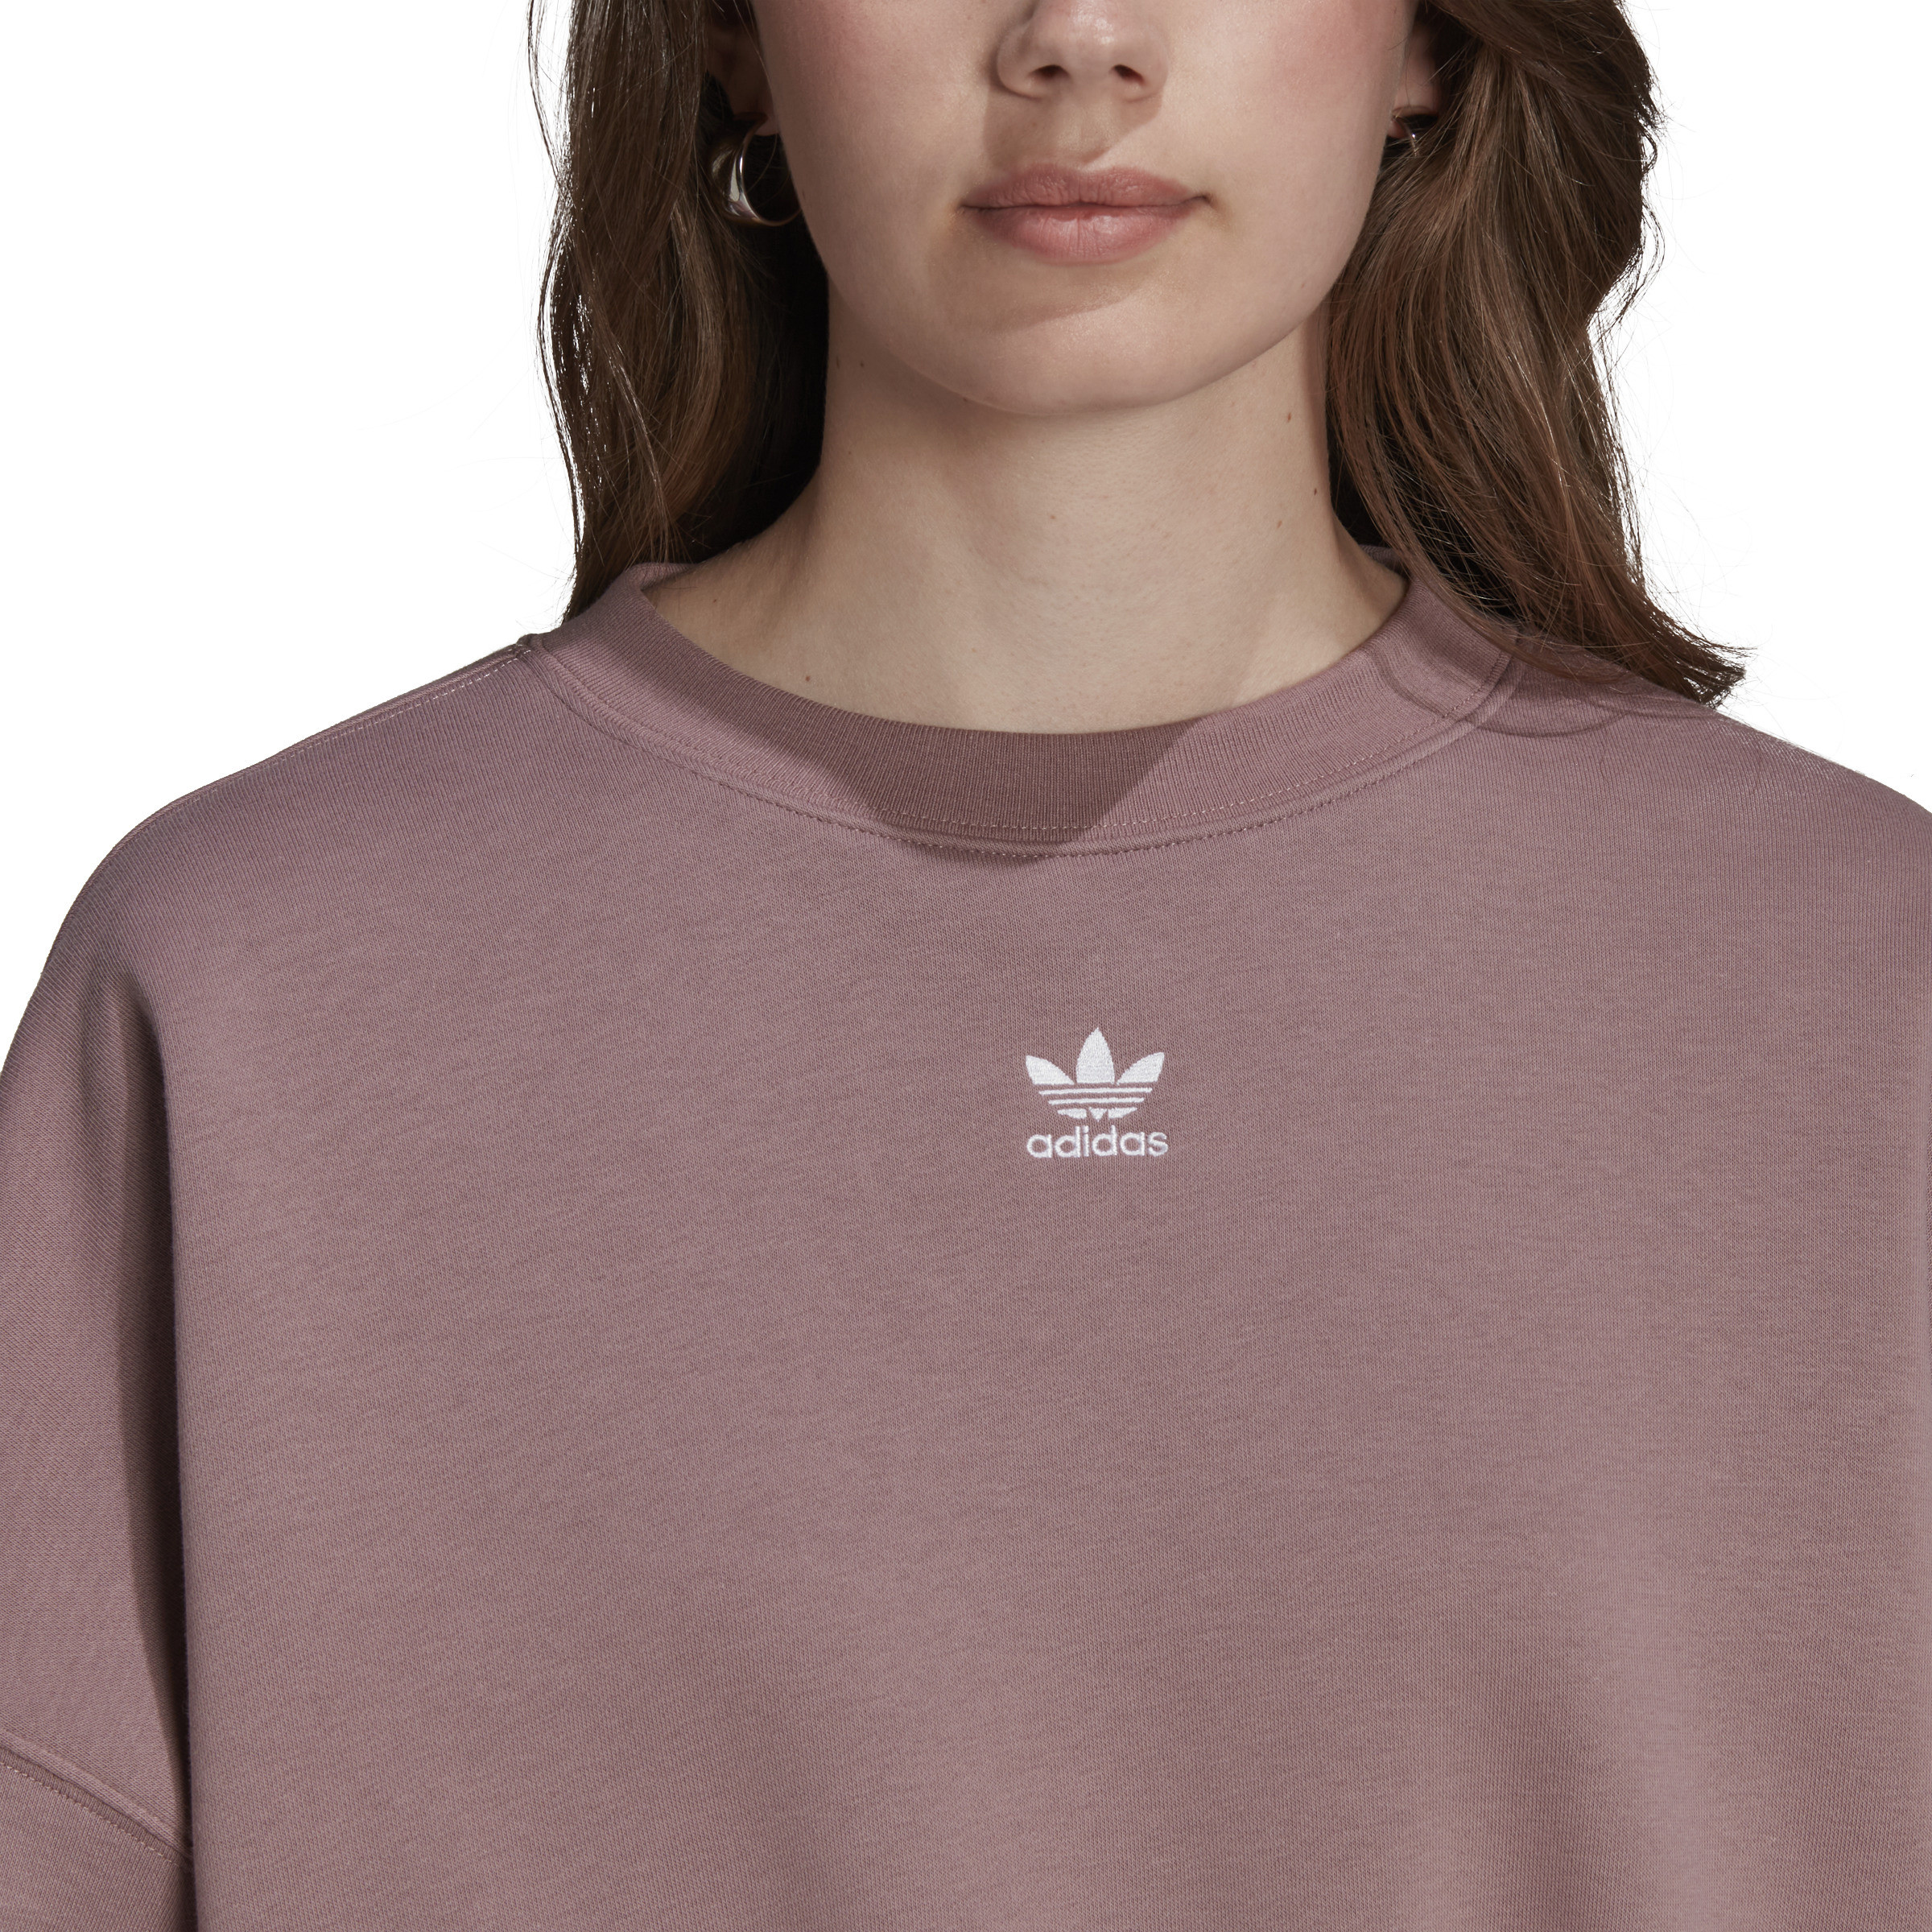 Adidas - Sweatshirt adicolor, Antique Pink, large image number 2